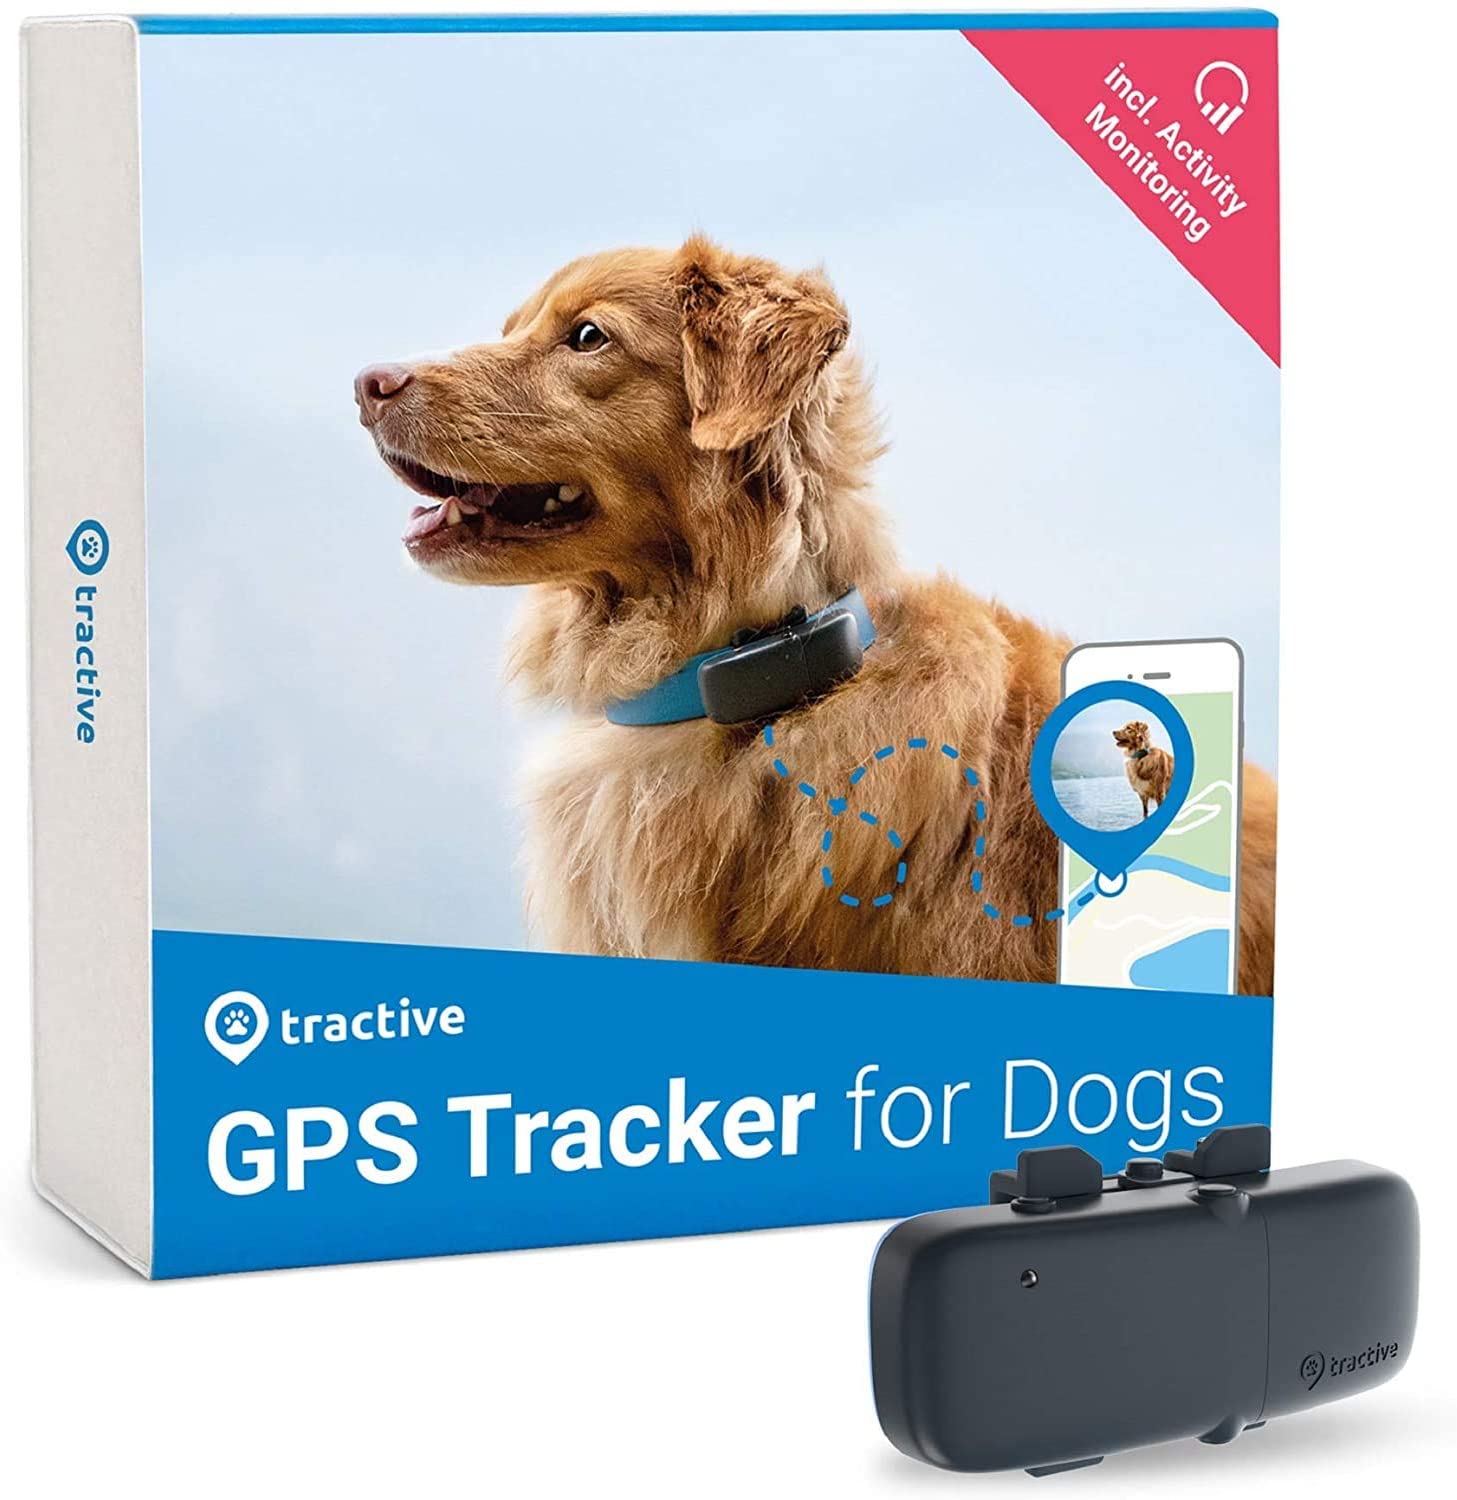 Dog tracker